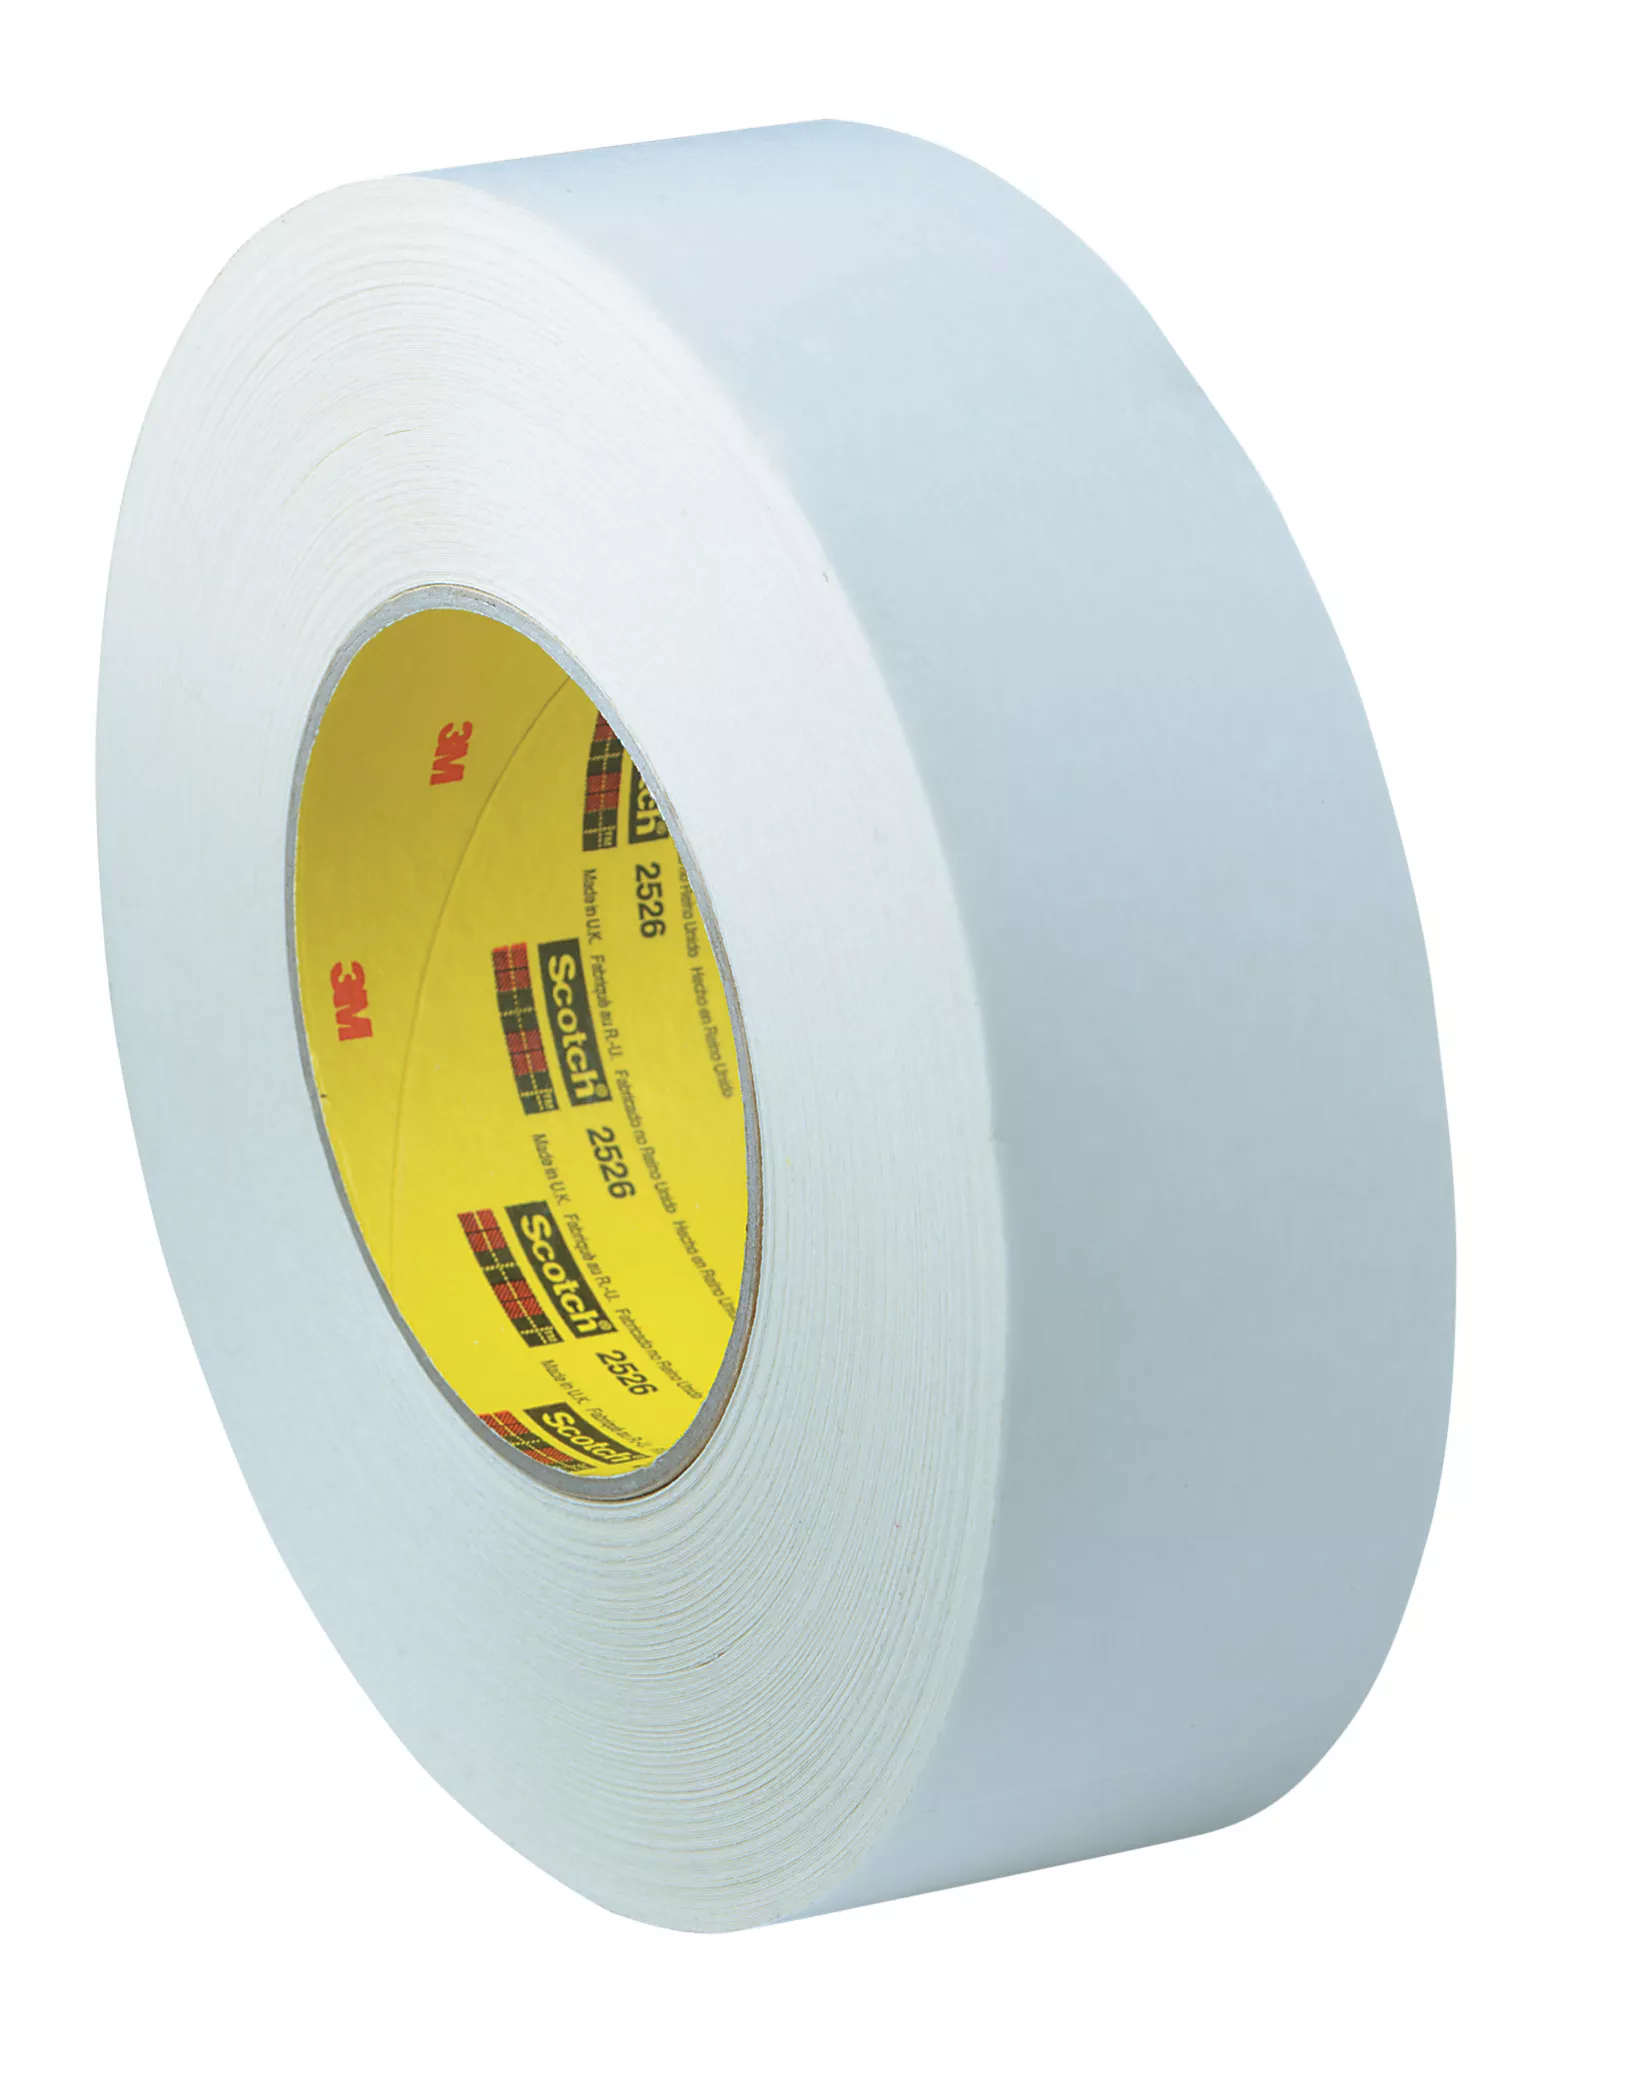 3M™ Textile Flatback Tape 2526, White, 24 mm x 55 m, 9.8 mil, 36
Rolls/Case